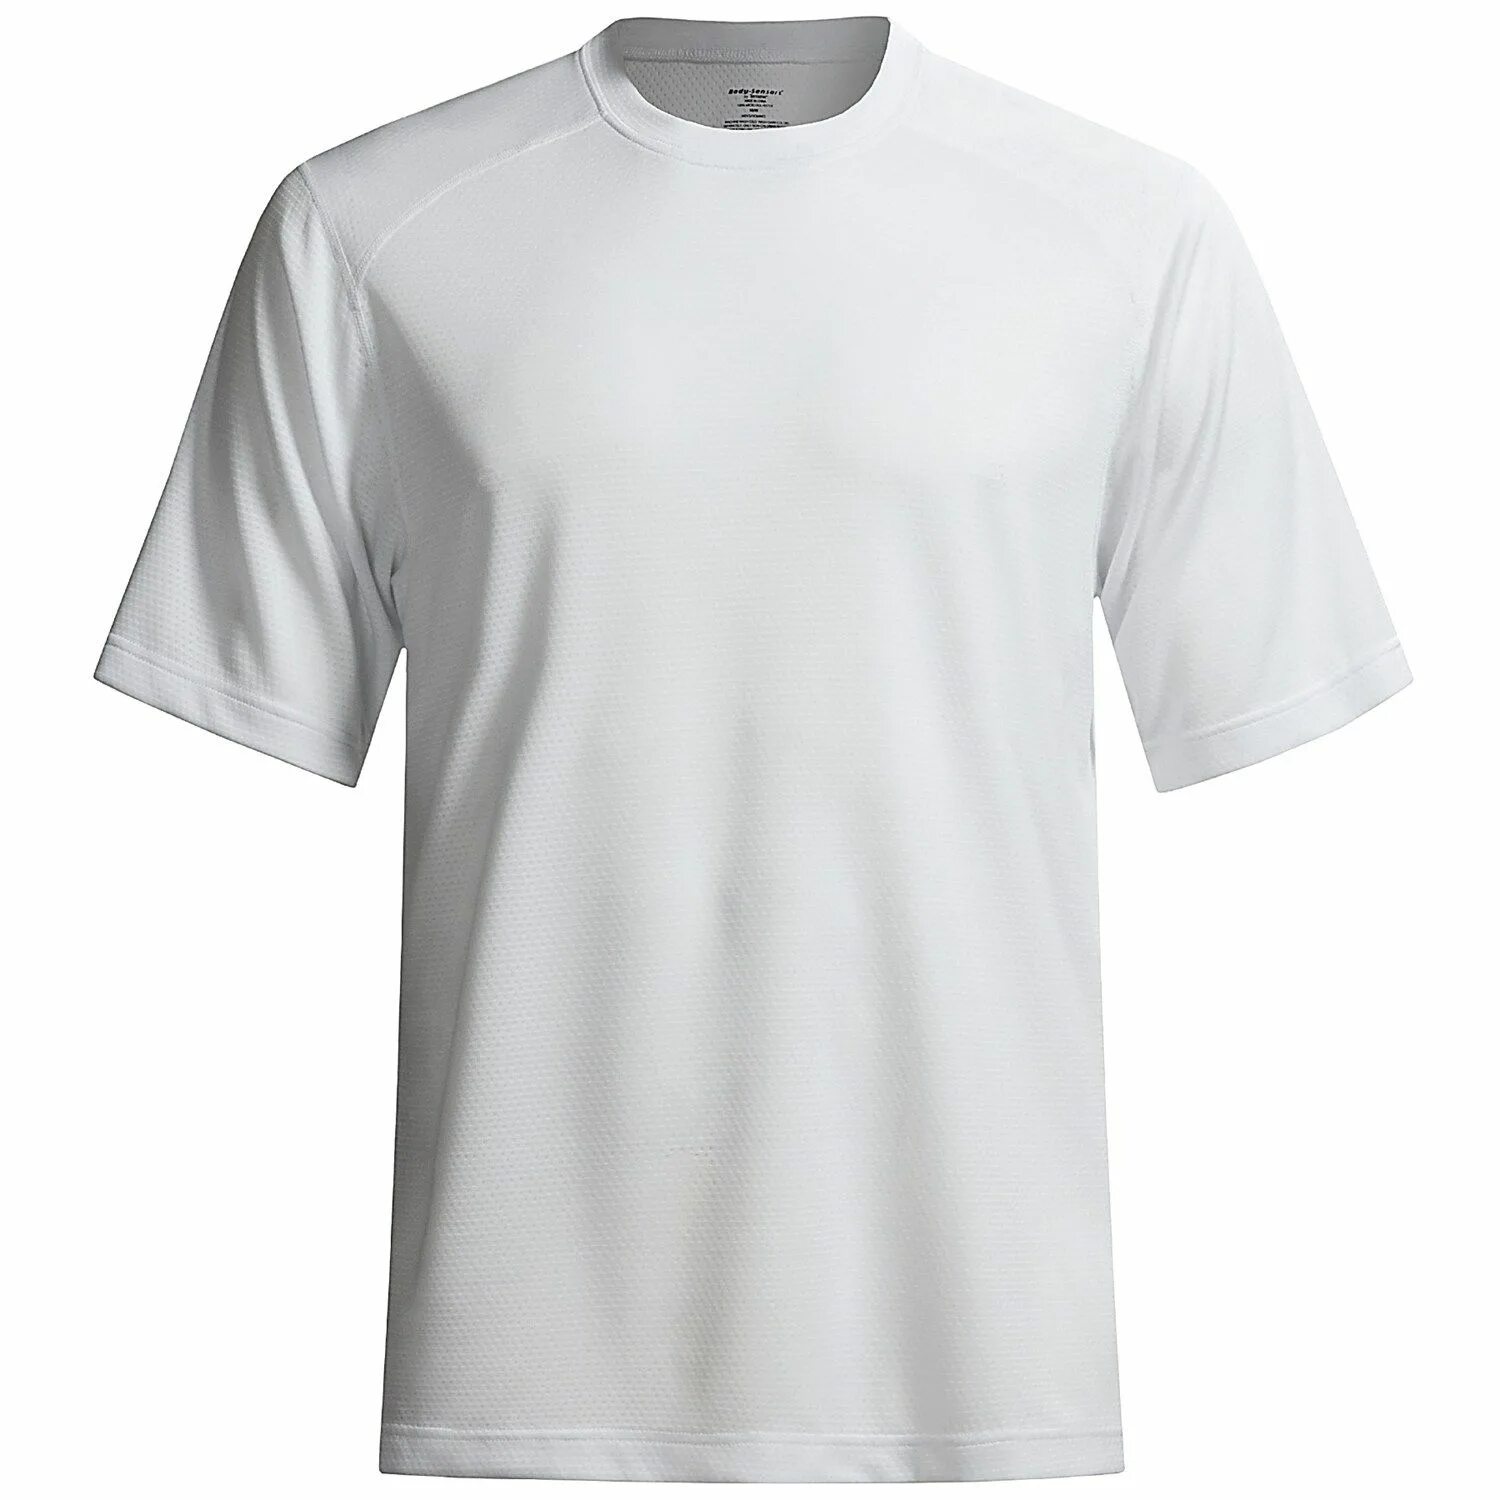 Белая футболка. Футболка мужская полиэстер. Белая футболка мужская. Бланковая футболка.